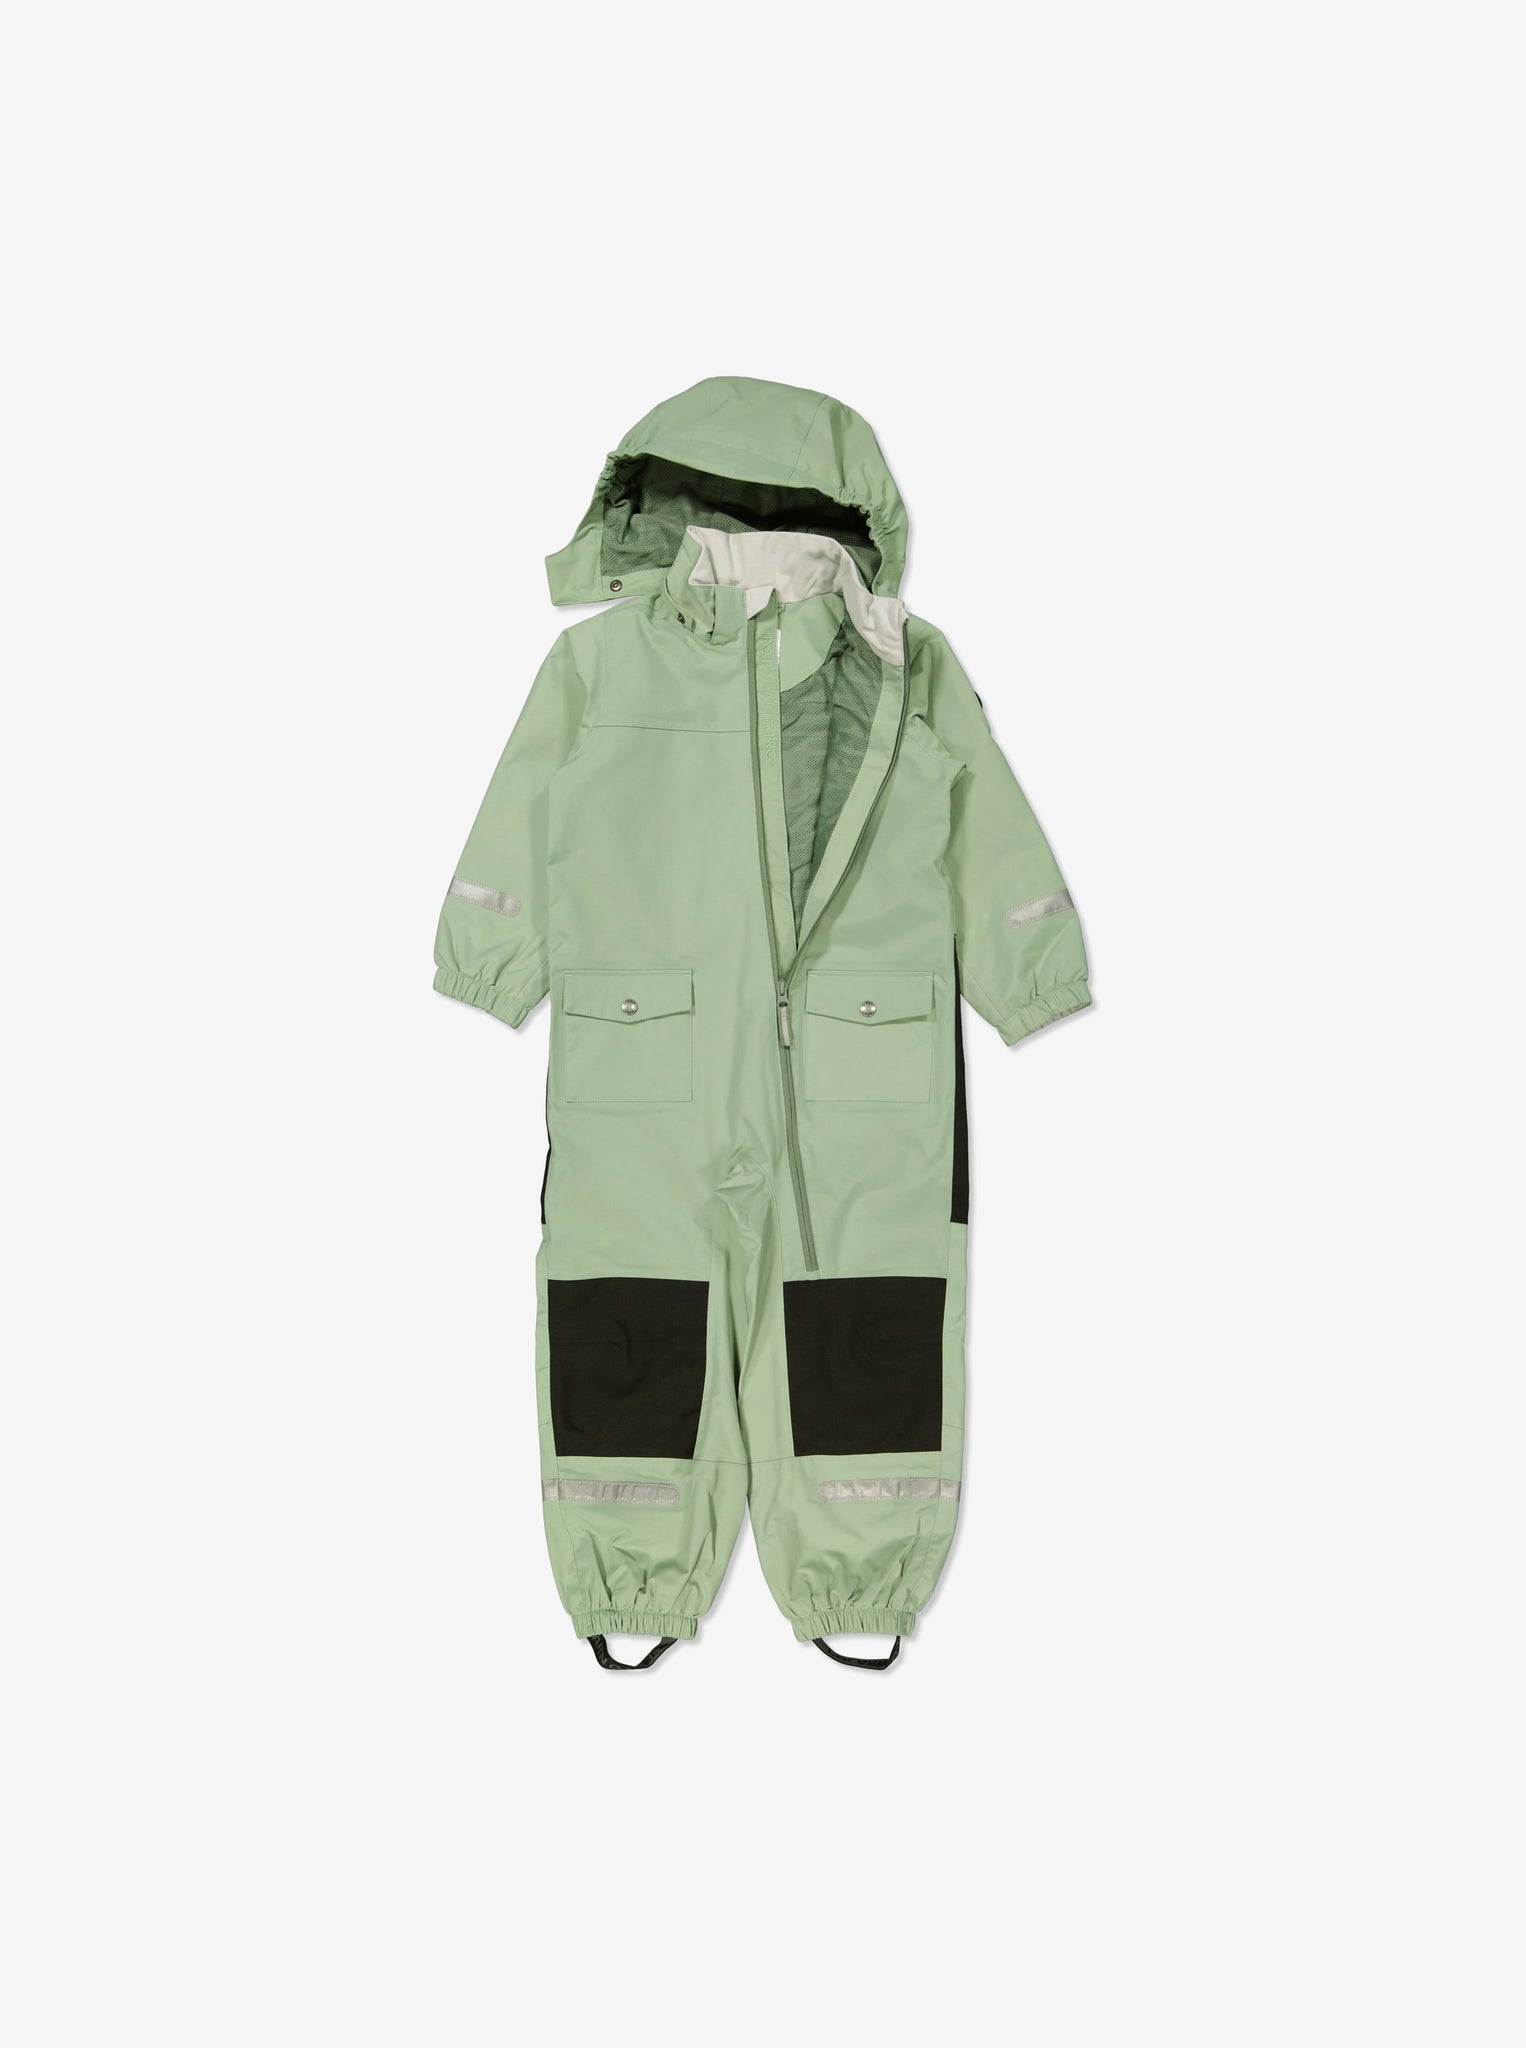 Green Kids Waterproof Overall from Polarn O. Pyret Kidswear. 